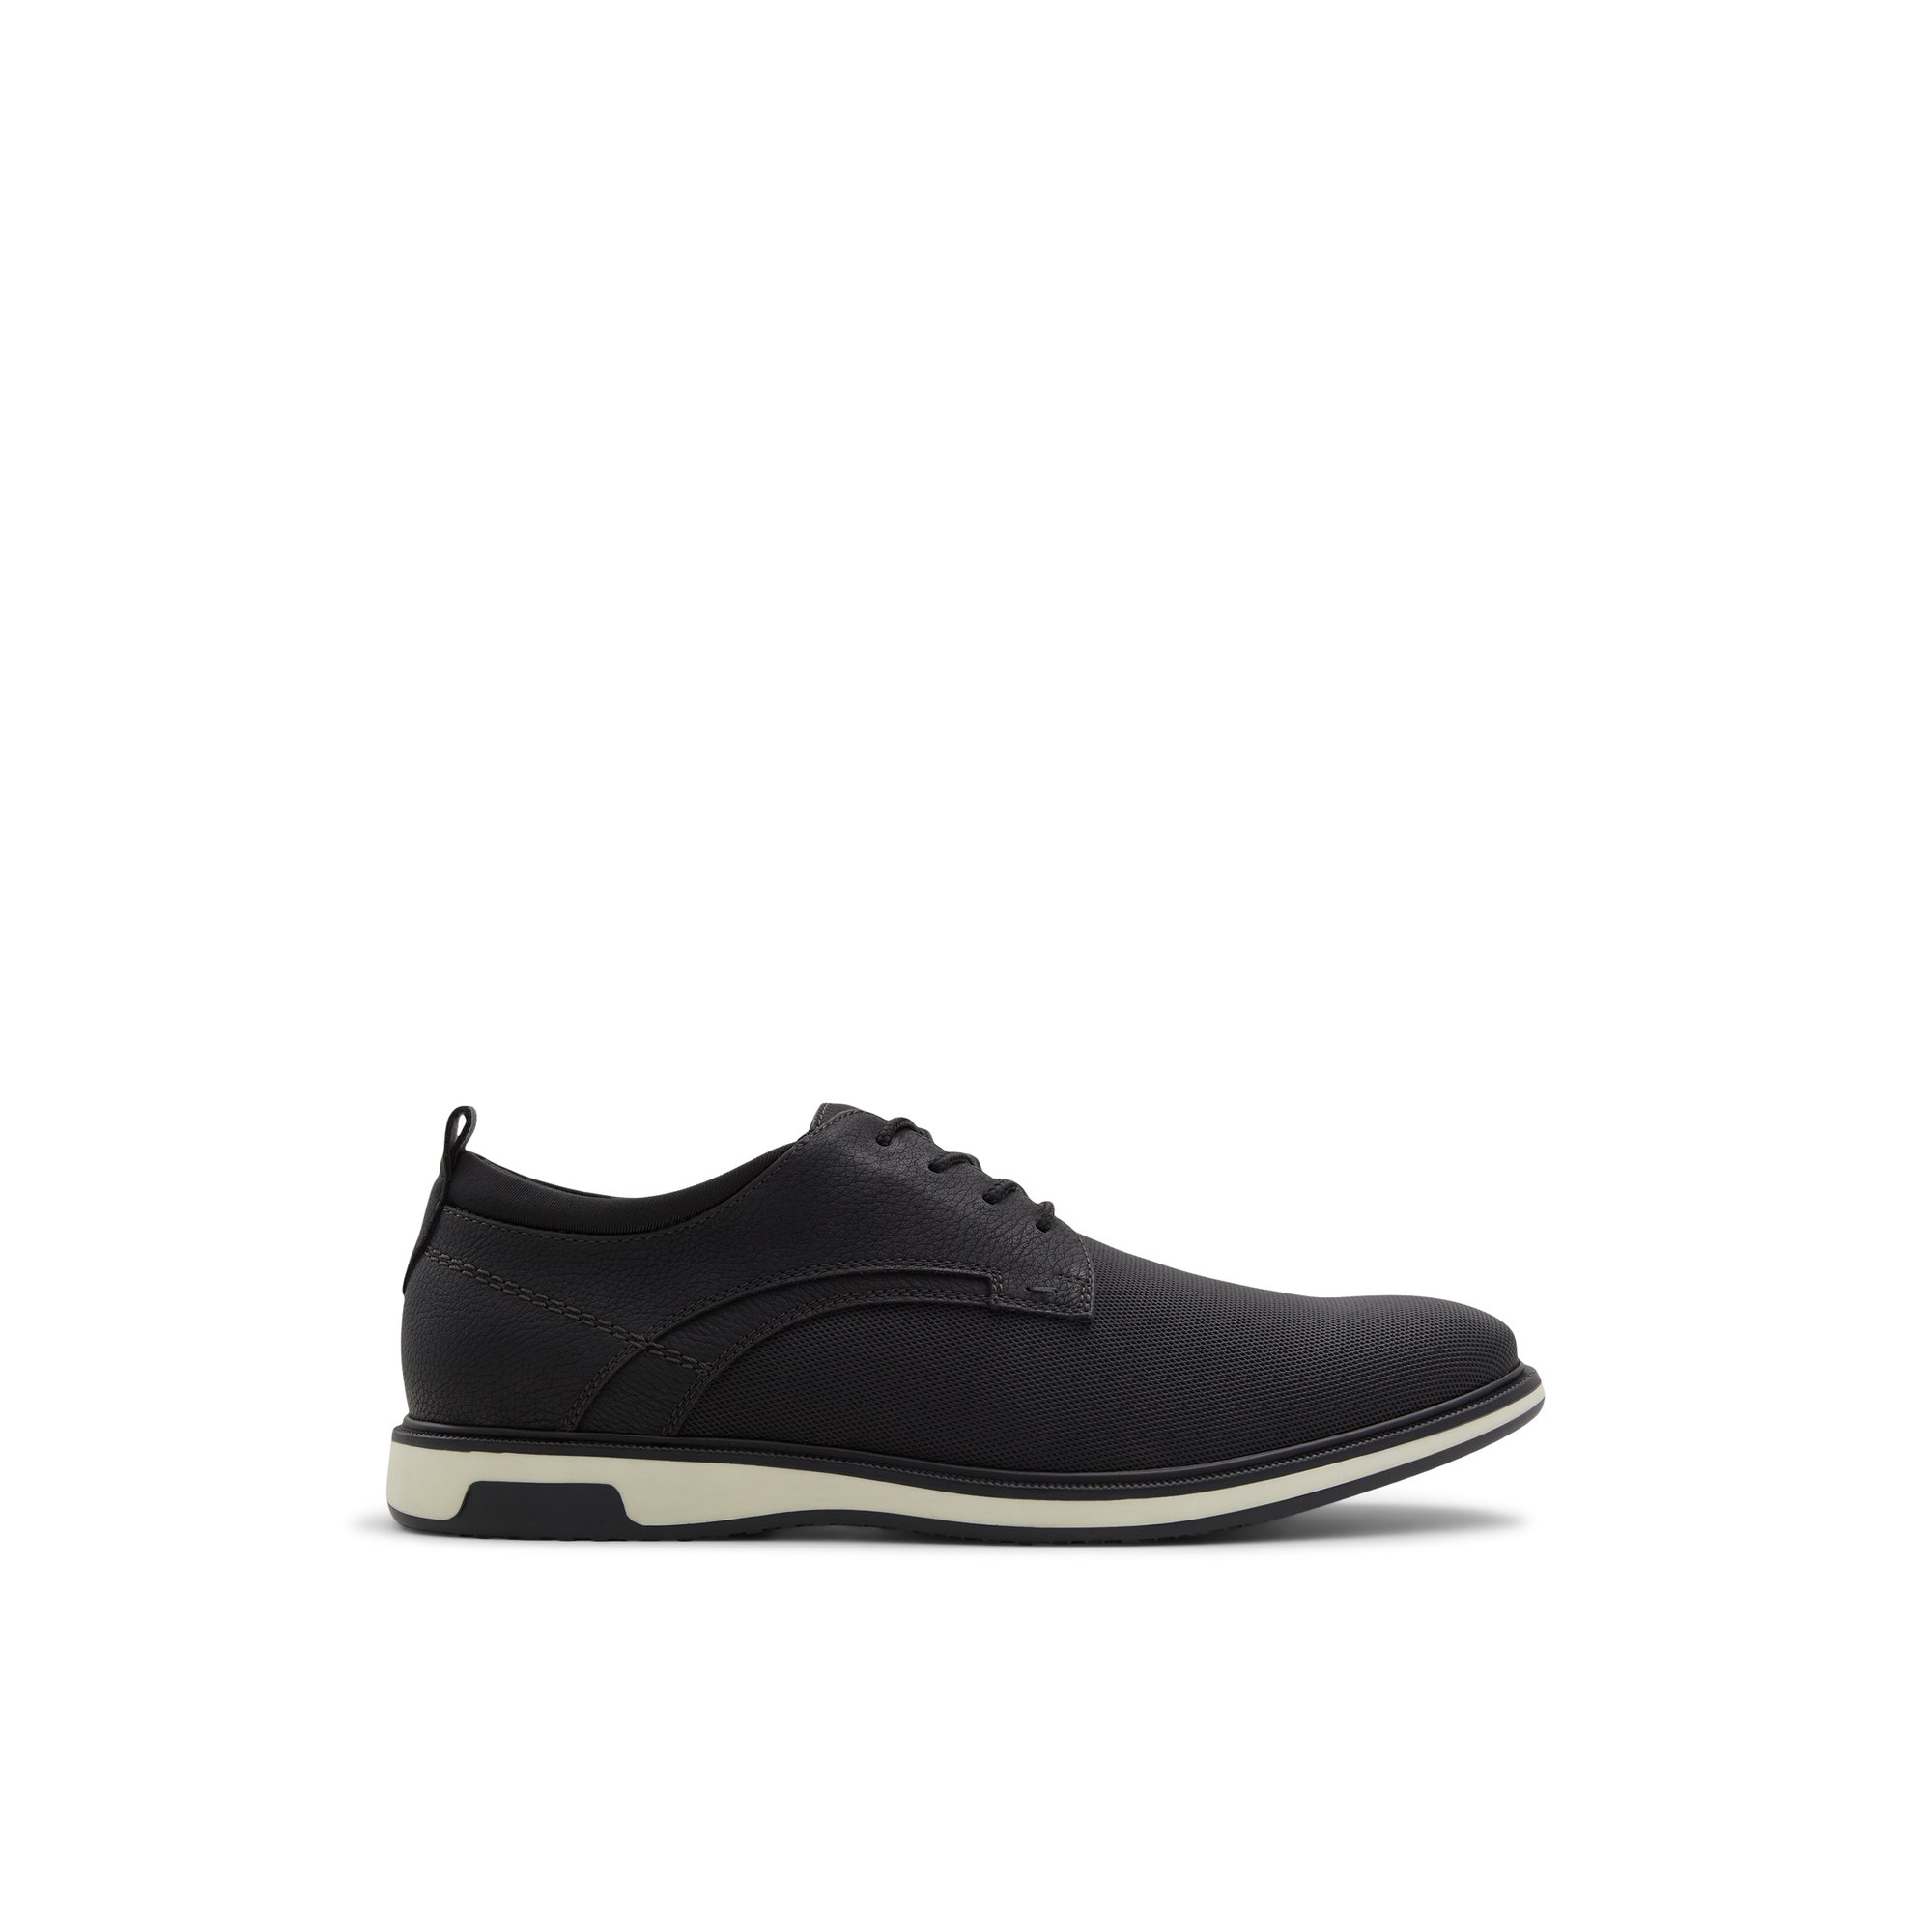 ALDO Karson - Men's Casual Shoes - Black